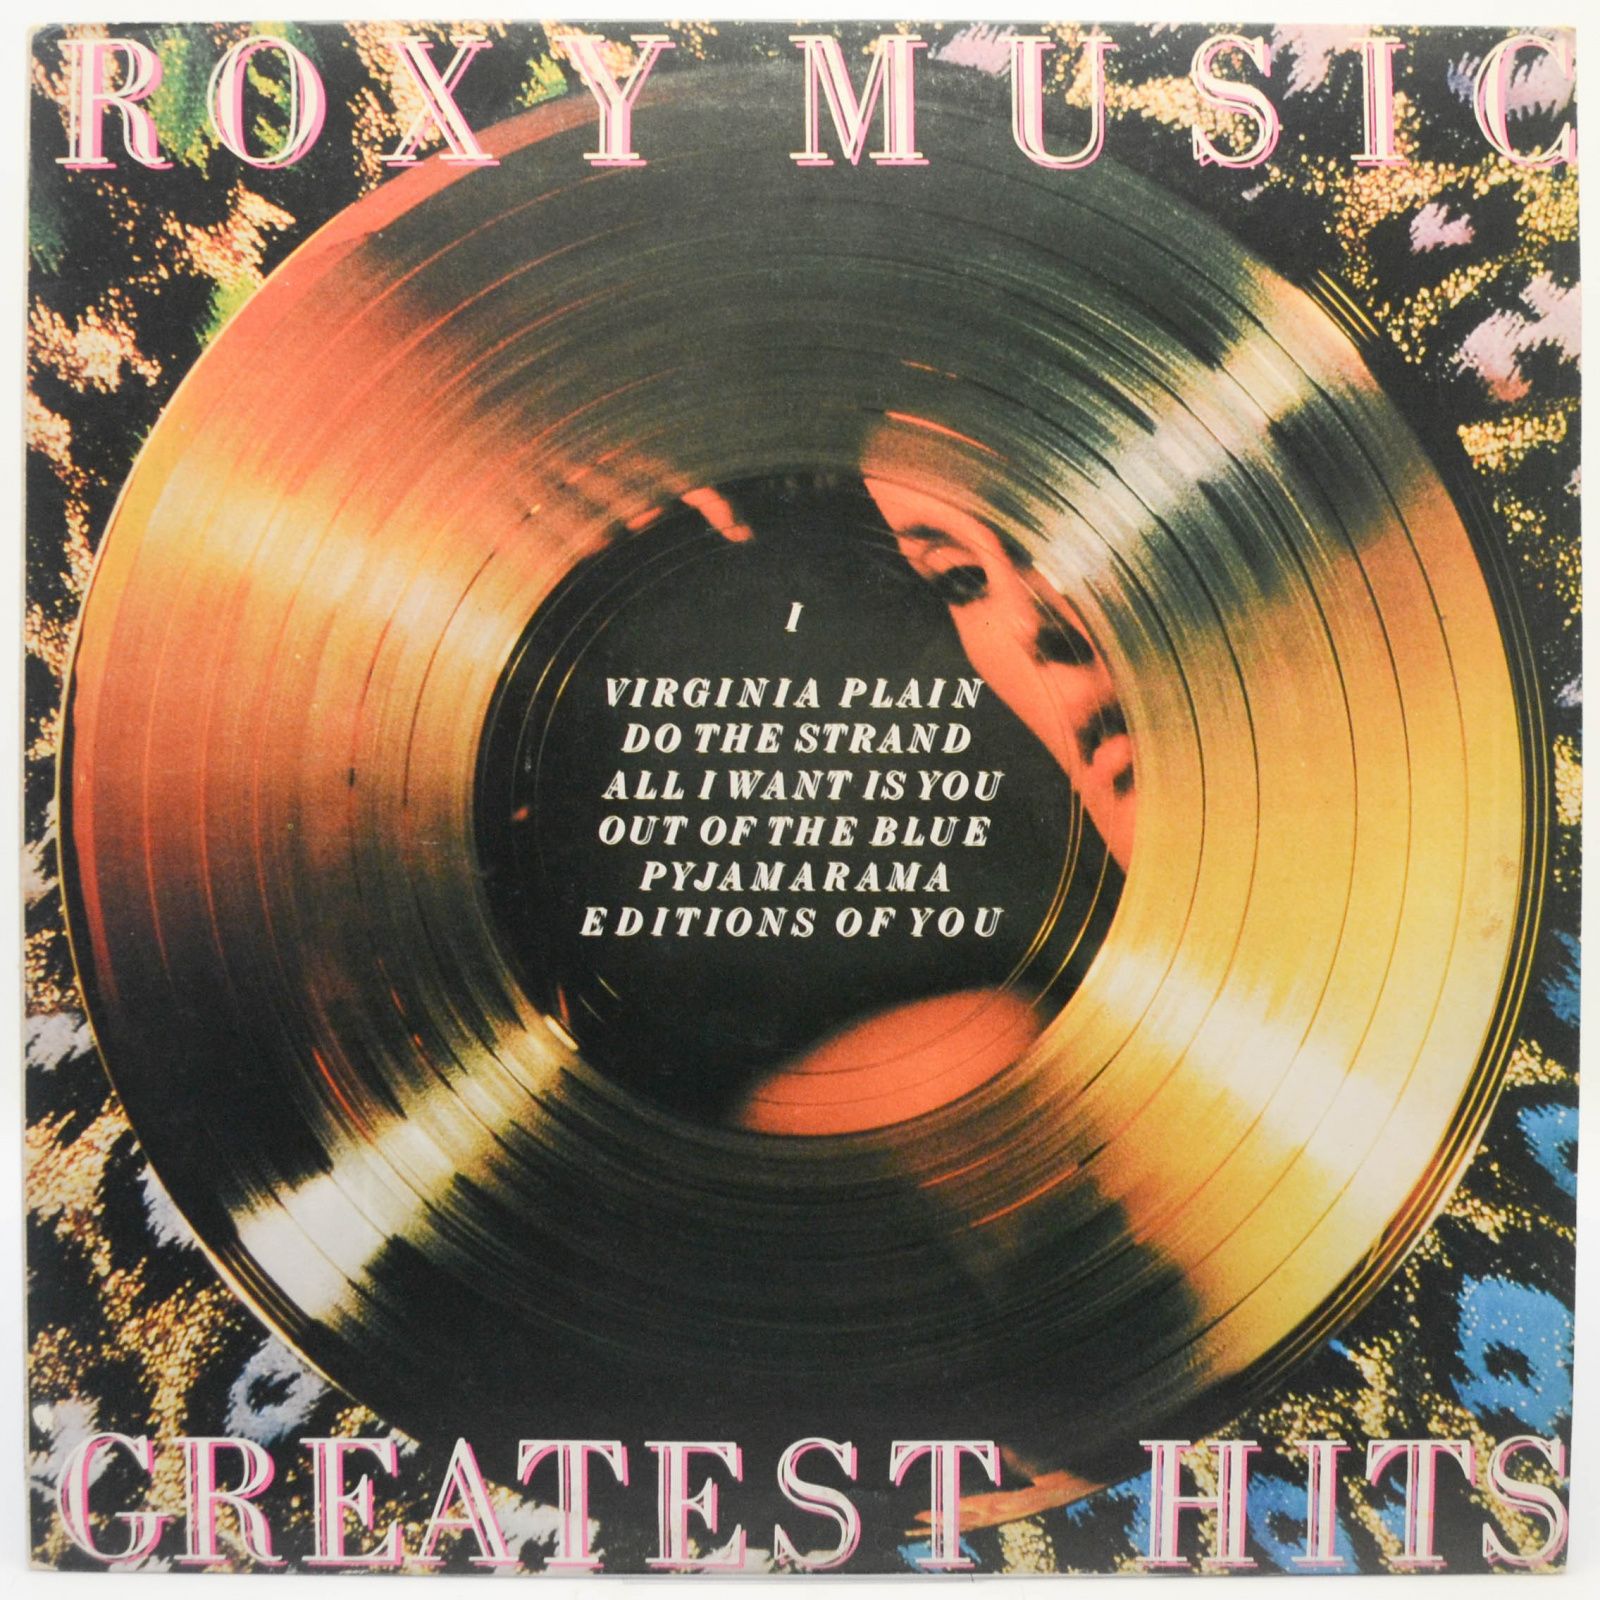 Roxy Music — Greatest Hits, 1977